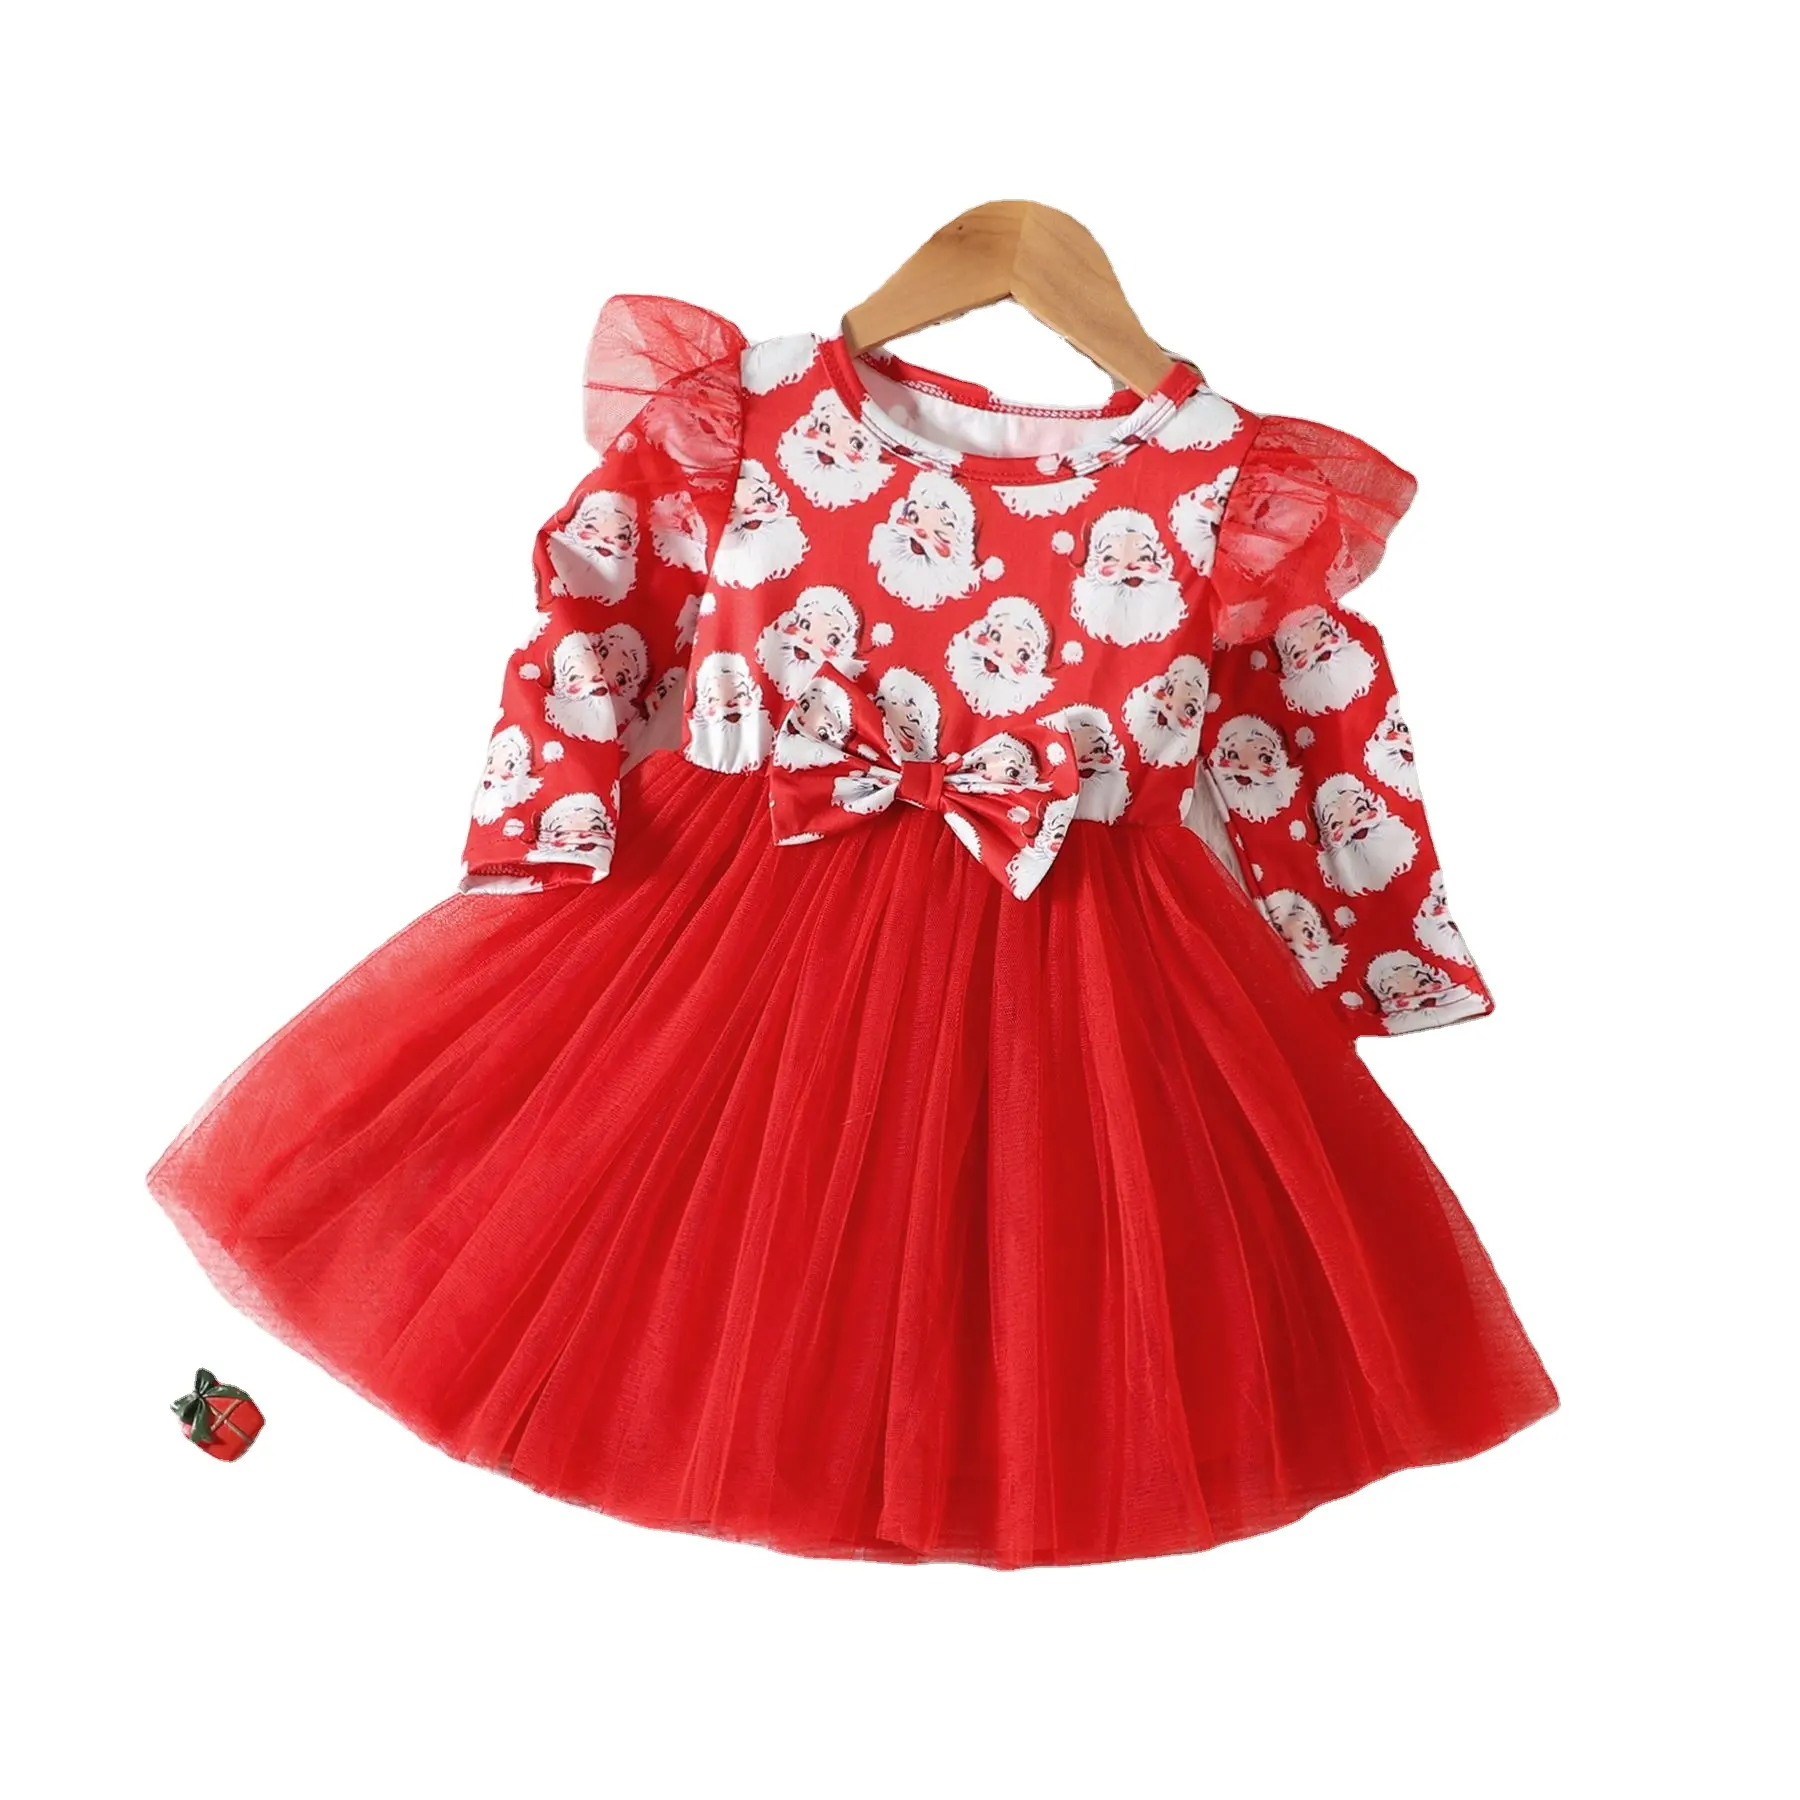 High quality cotton low price Santa Claus printed pattern dress baby girls Christmas dress girls lace princess dress for kid